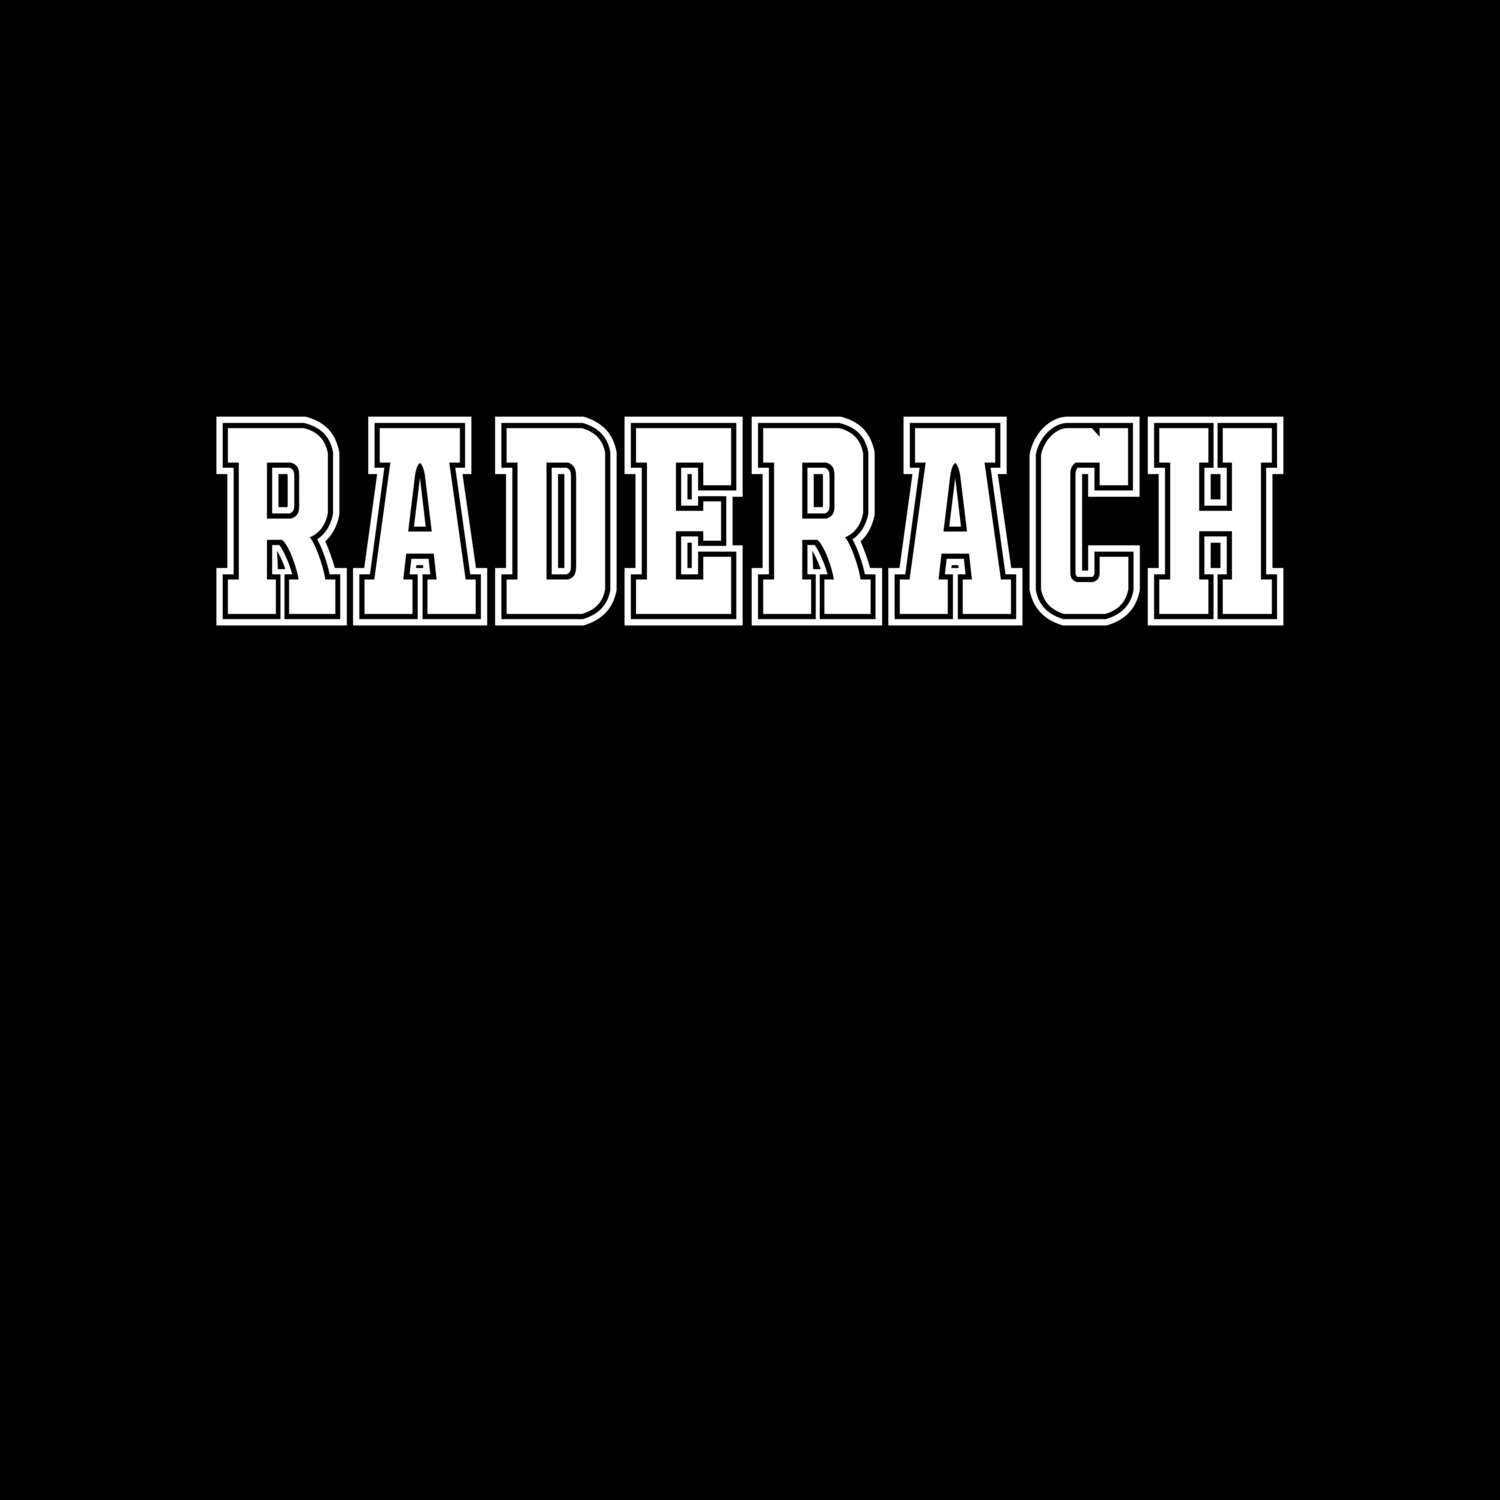 Raderach T-Shirt »Classic«